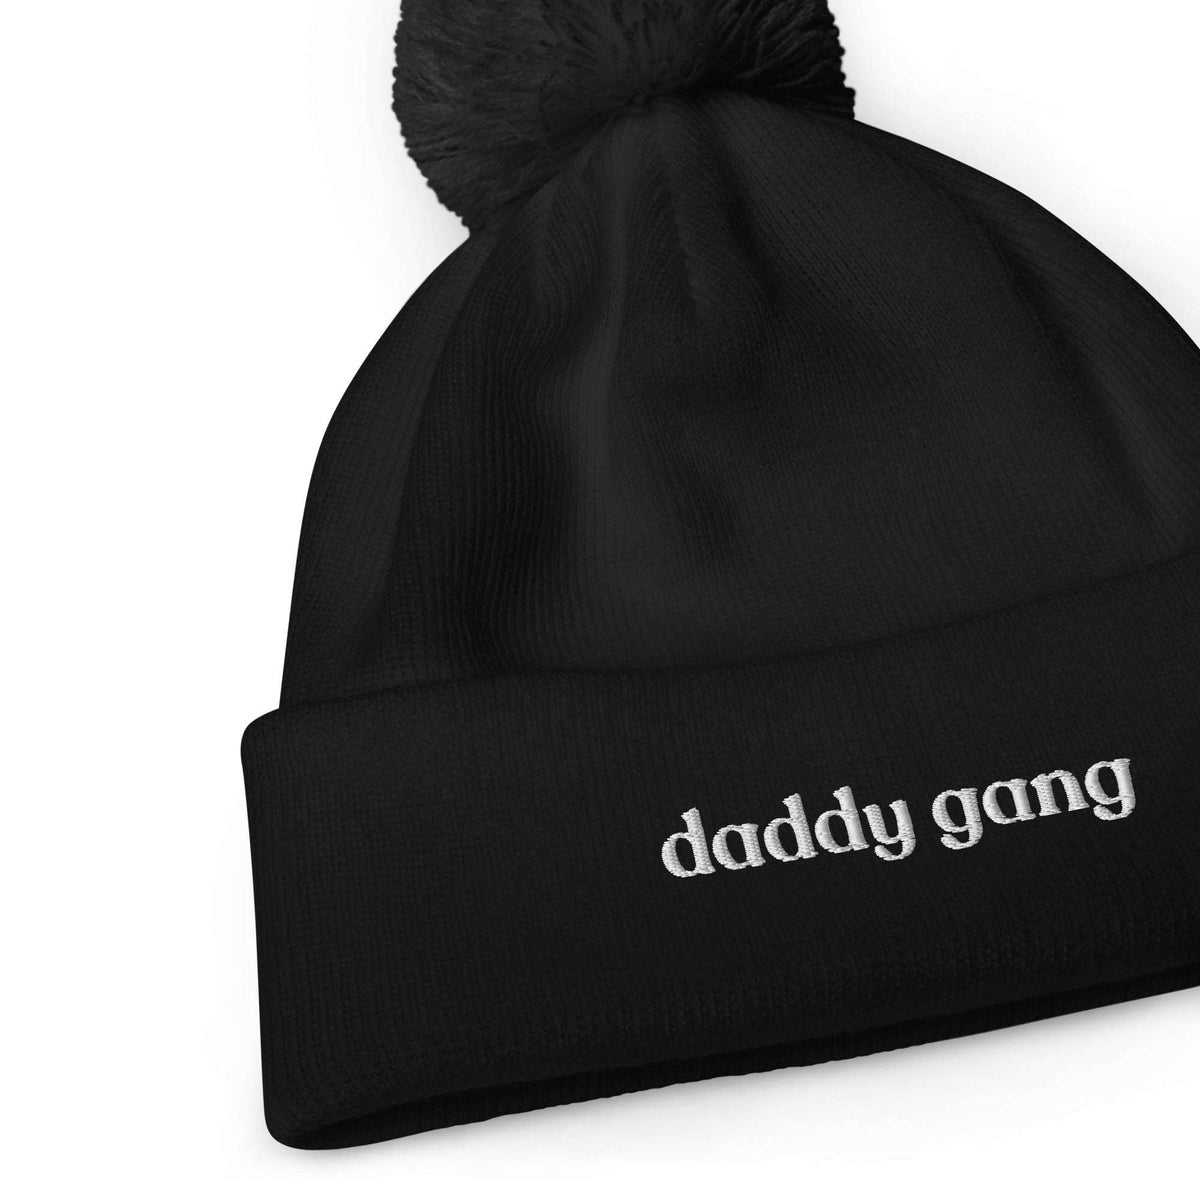 Bonnet Pompon | Daddy Gang